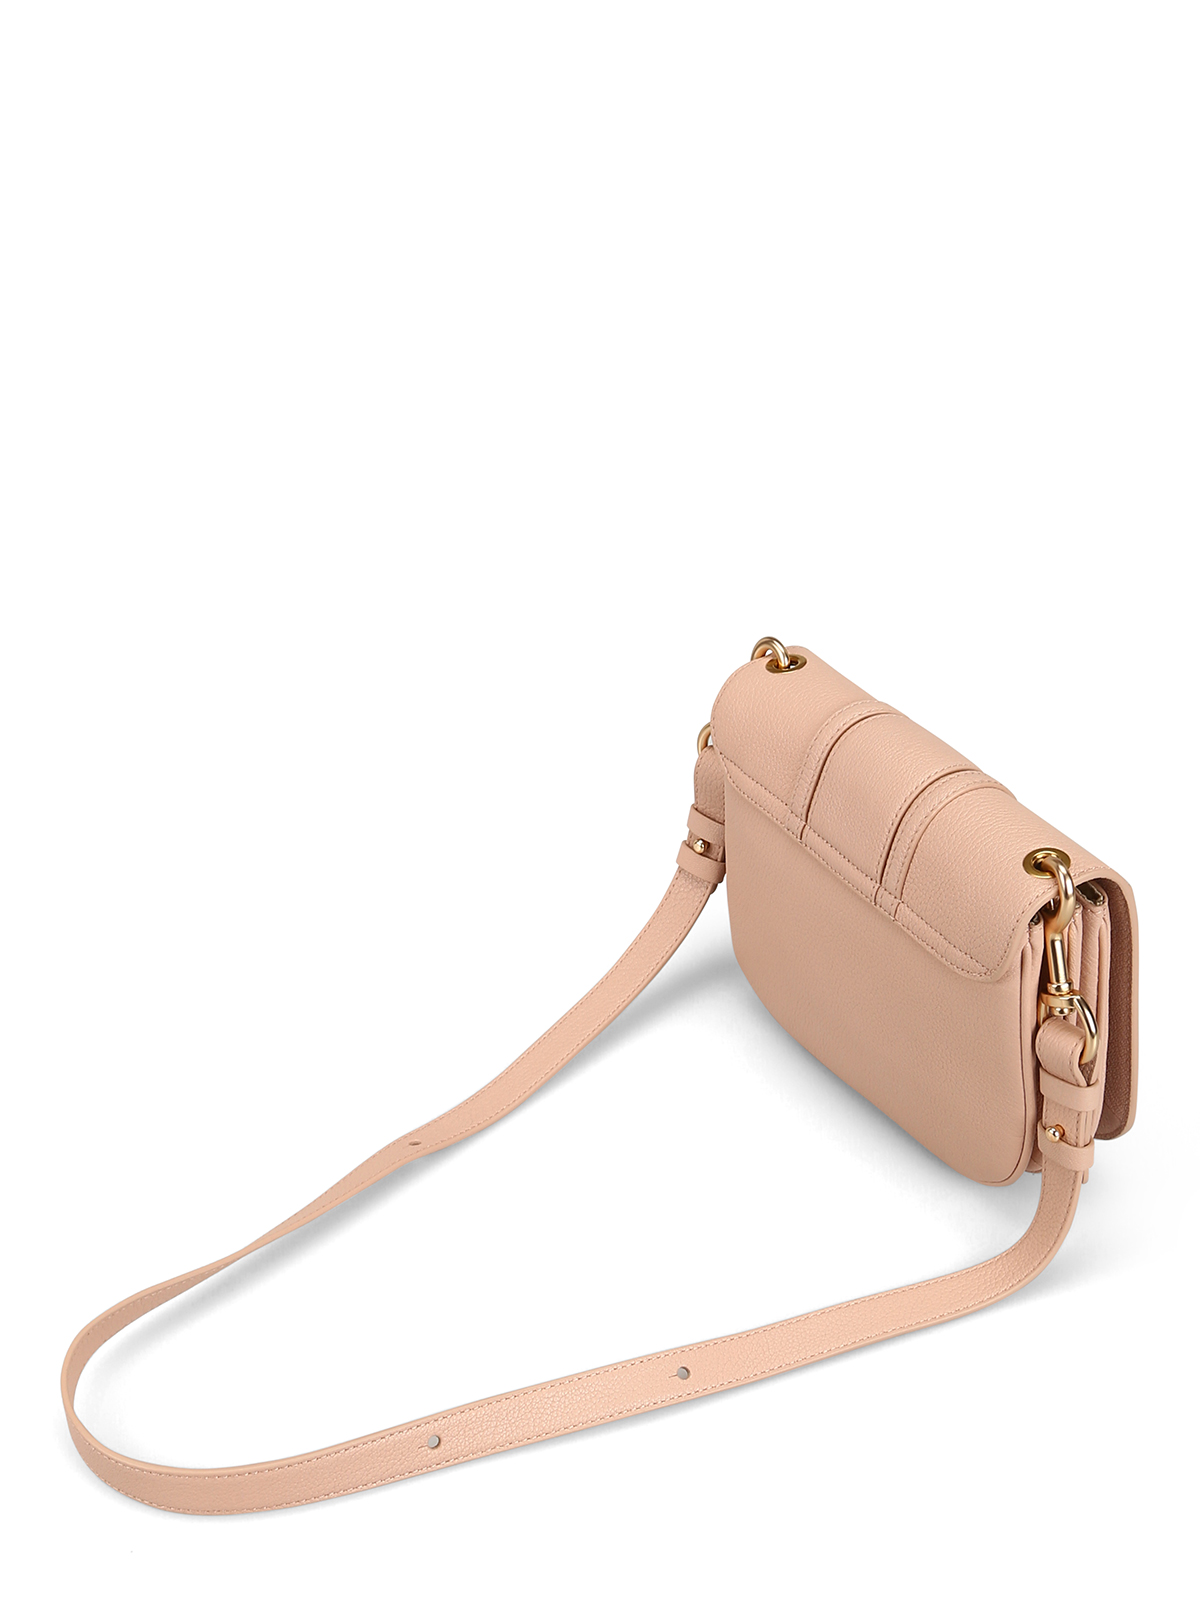 Shoulder bags See by Chloé - Hana light pink leather bag 